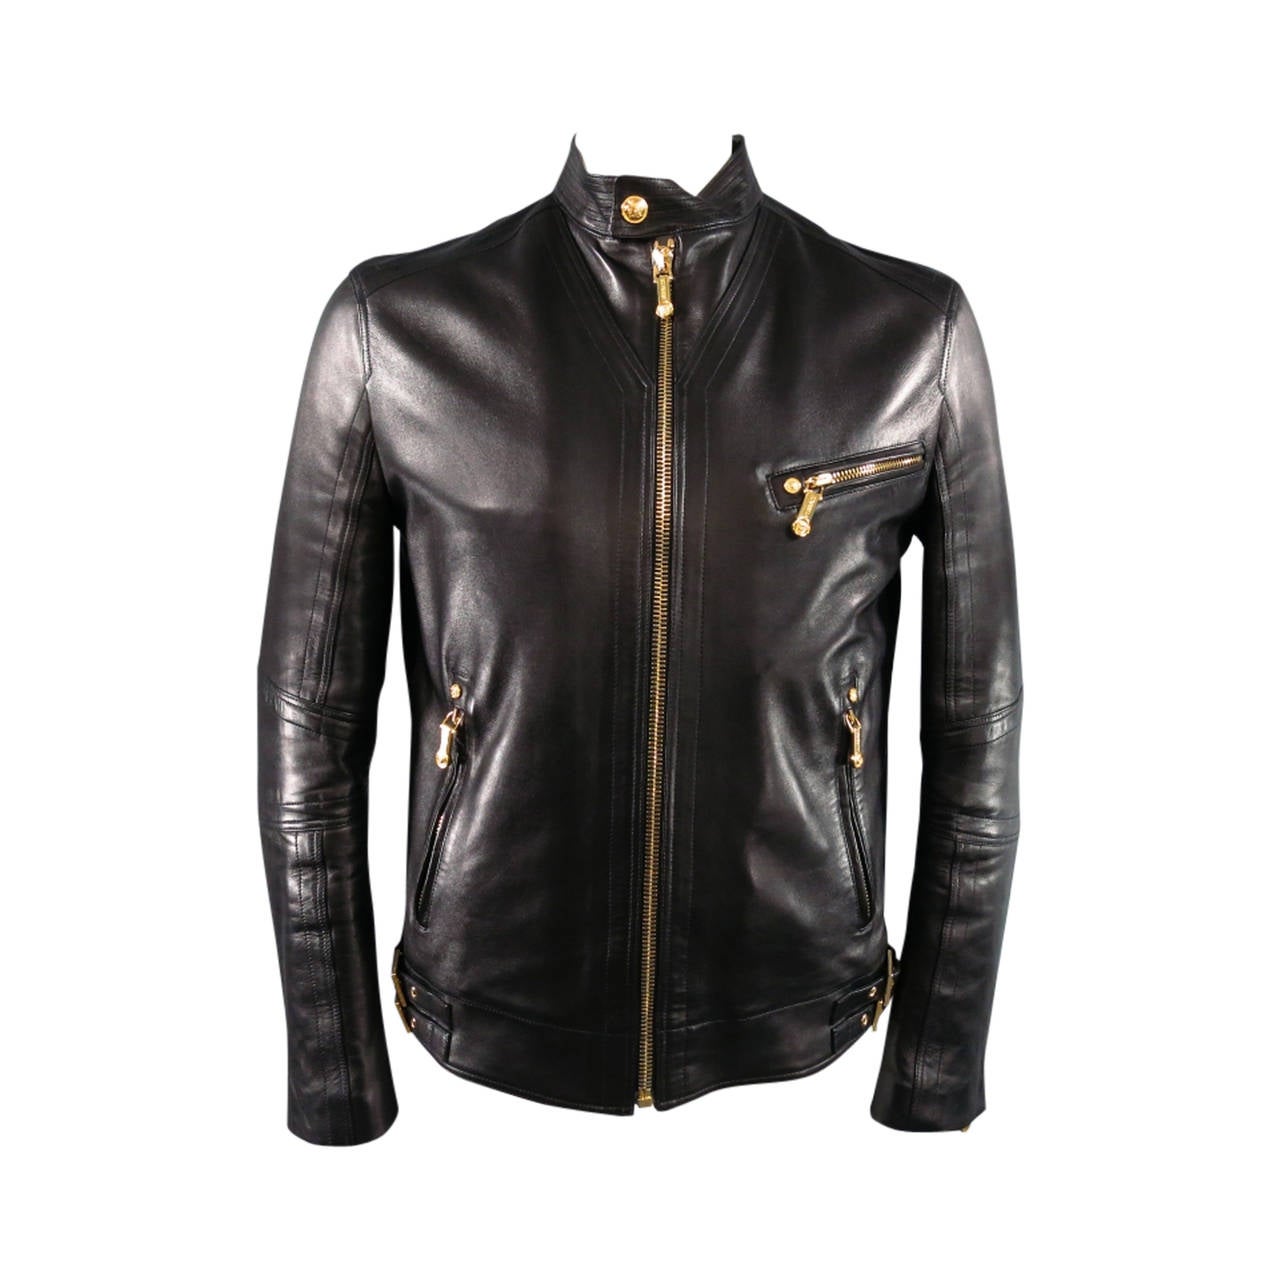 VERSACE 42 Black Leather Motorcylce Jacket with Gold Medusa Hardware at